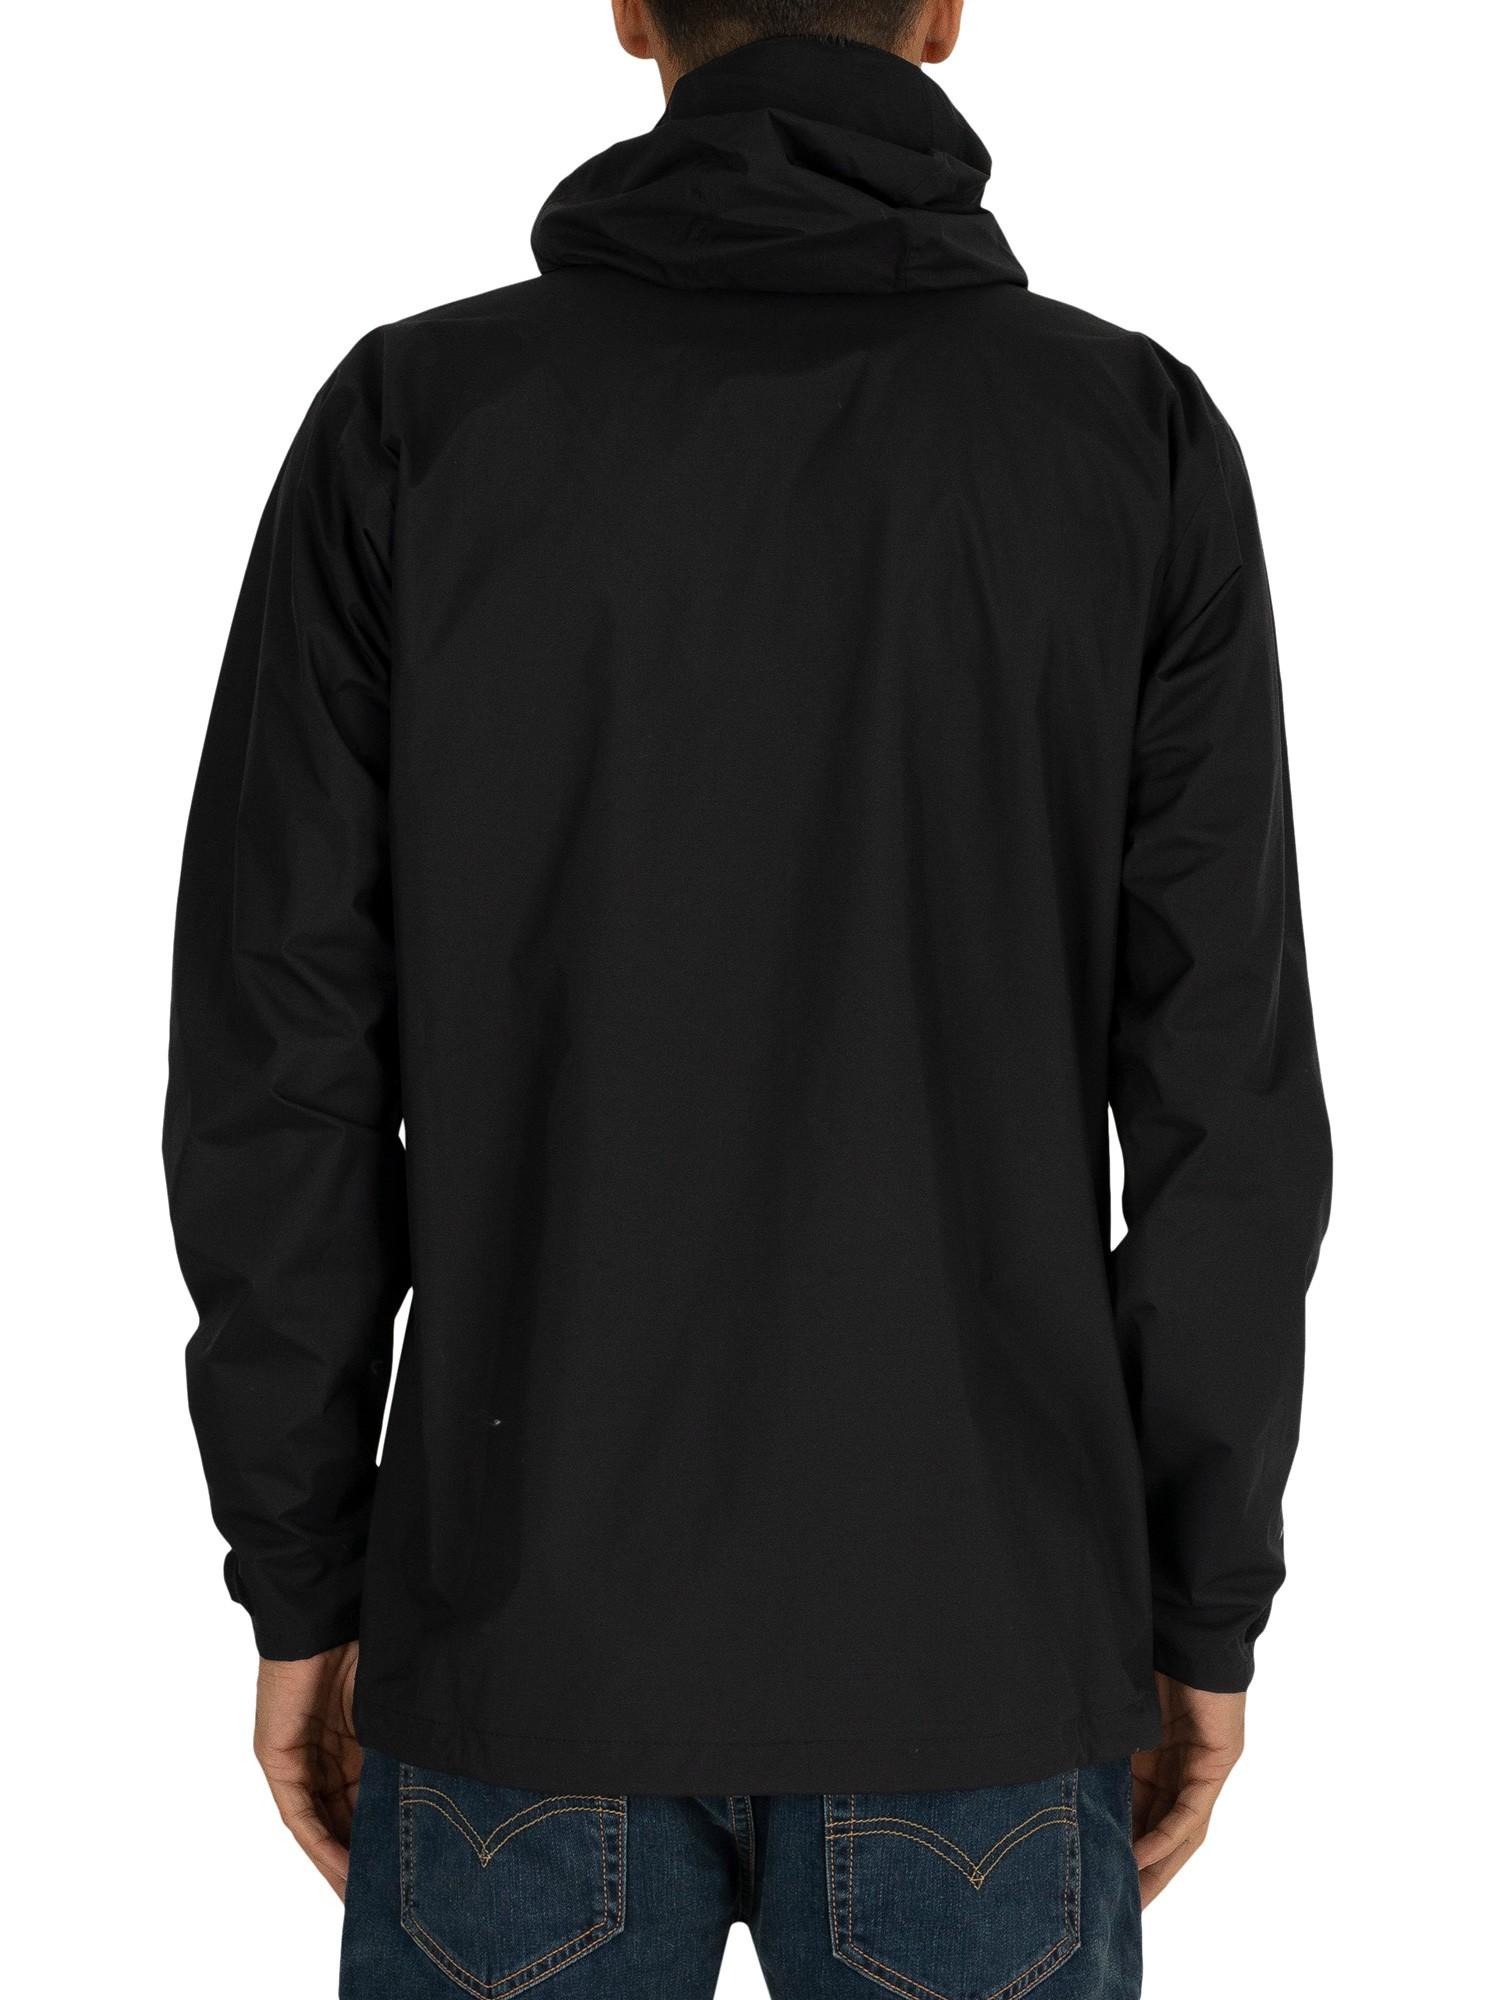 Berghaus Deluge Pro 2.0 Men's Insulated Waterproof Jacket in Black 